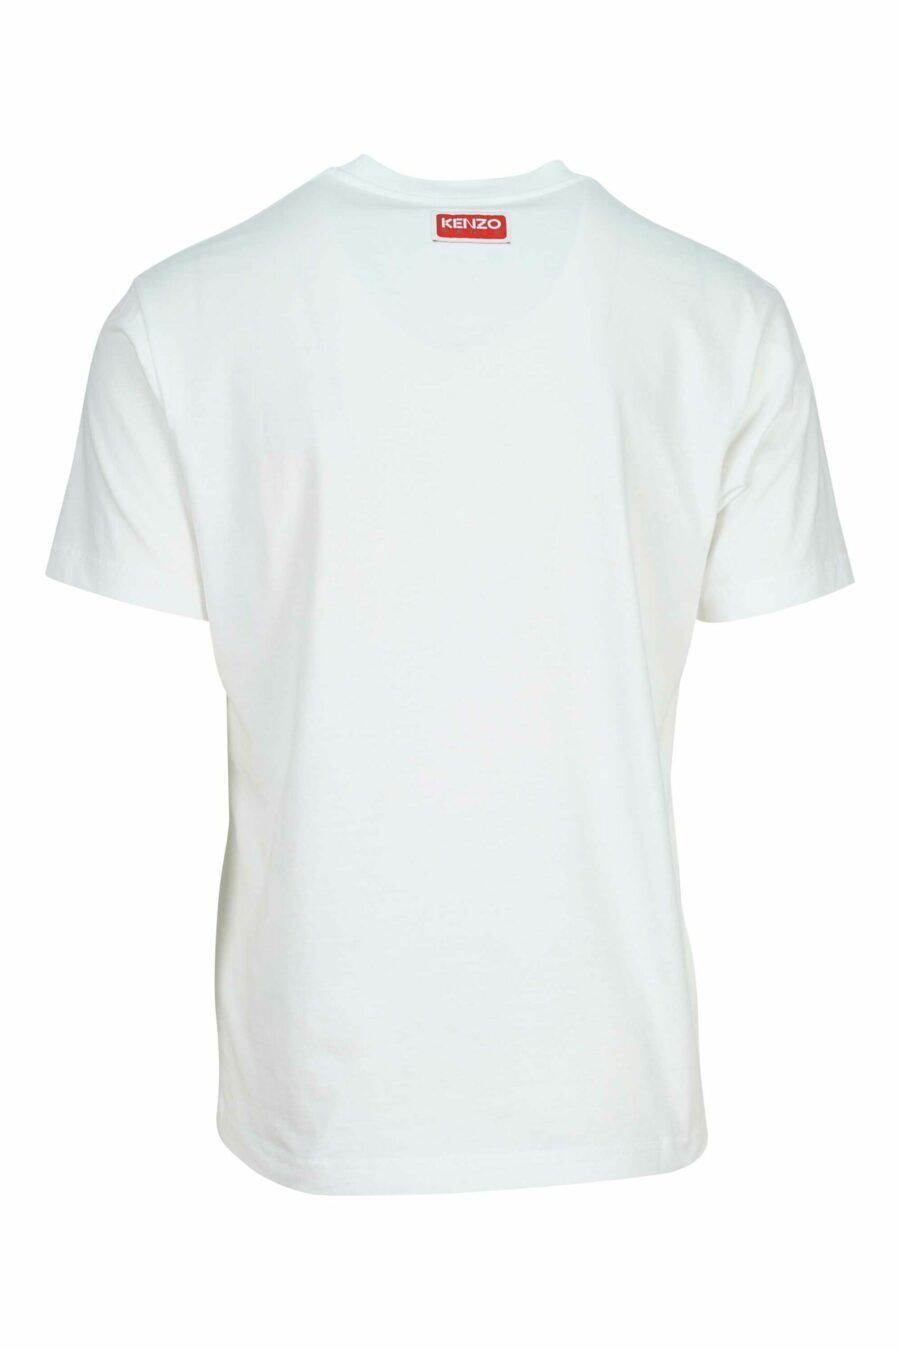 Camiseta blanca con maxilogo "kenzo elephant" - 3612230625501 1 scaled